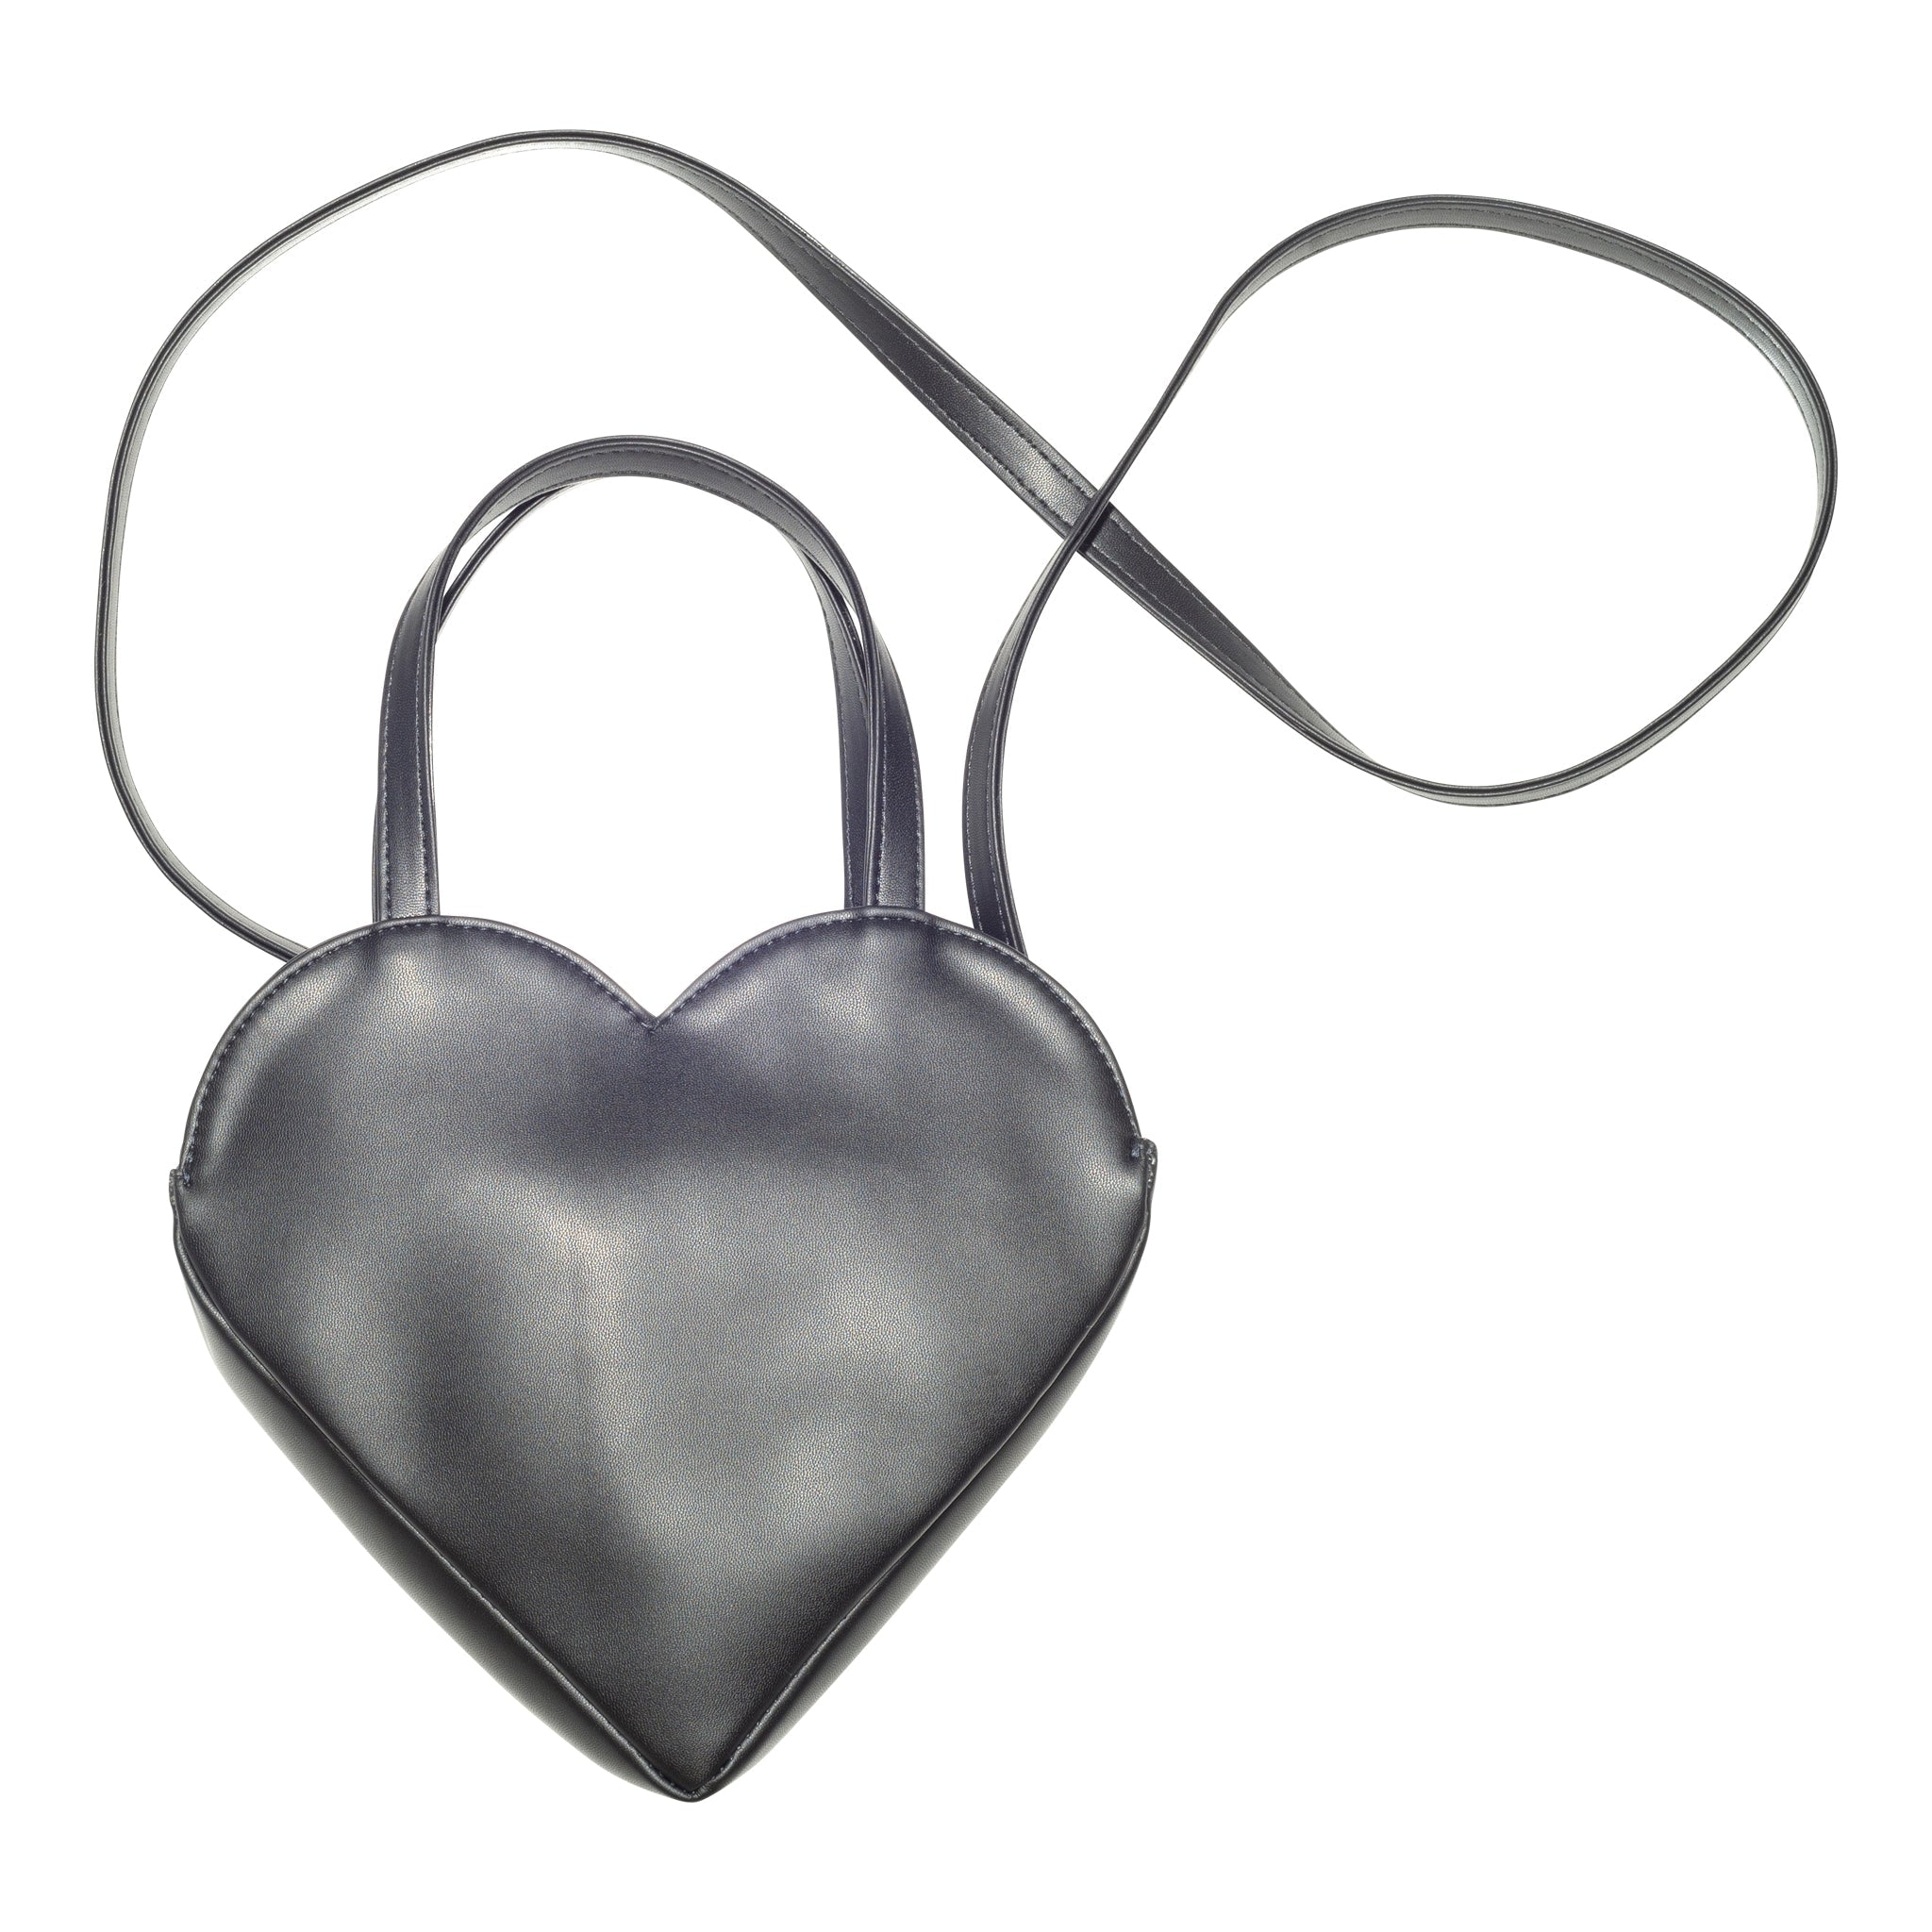 Human heart bag, black/brown strap